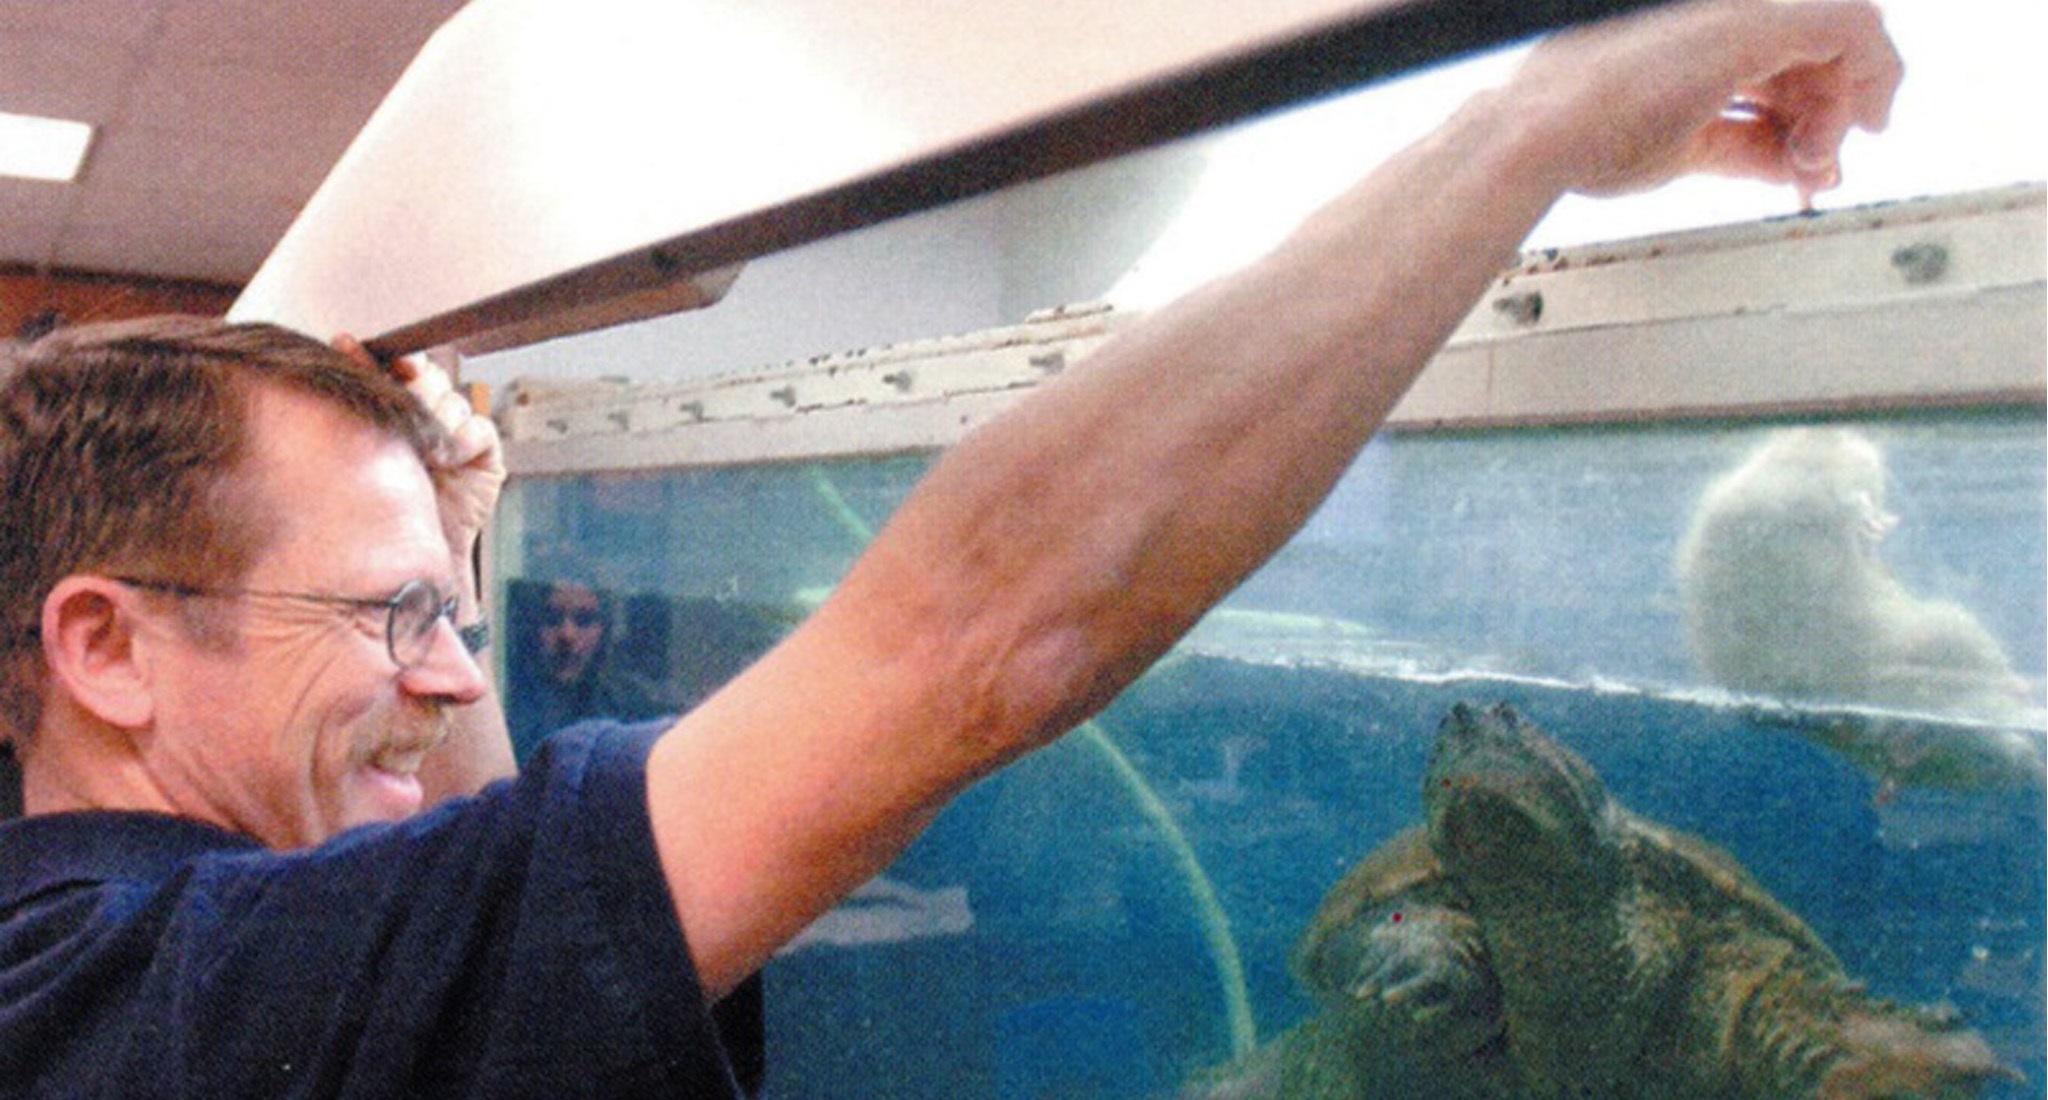 Robert Crosland dangles a rat in the turtle tank at Preston Junior High